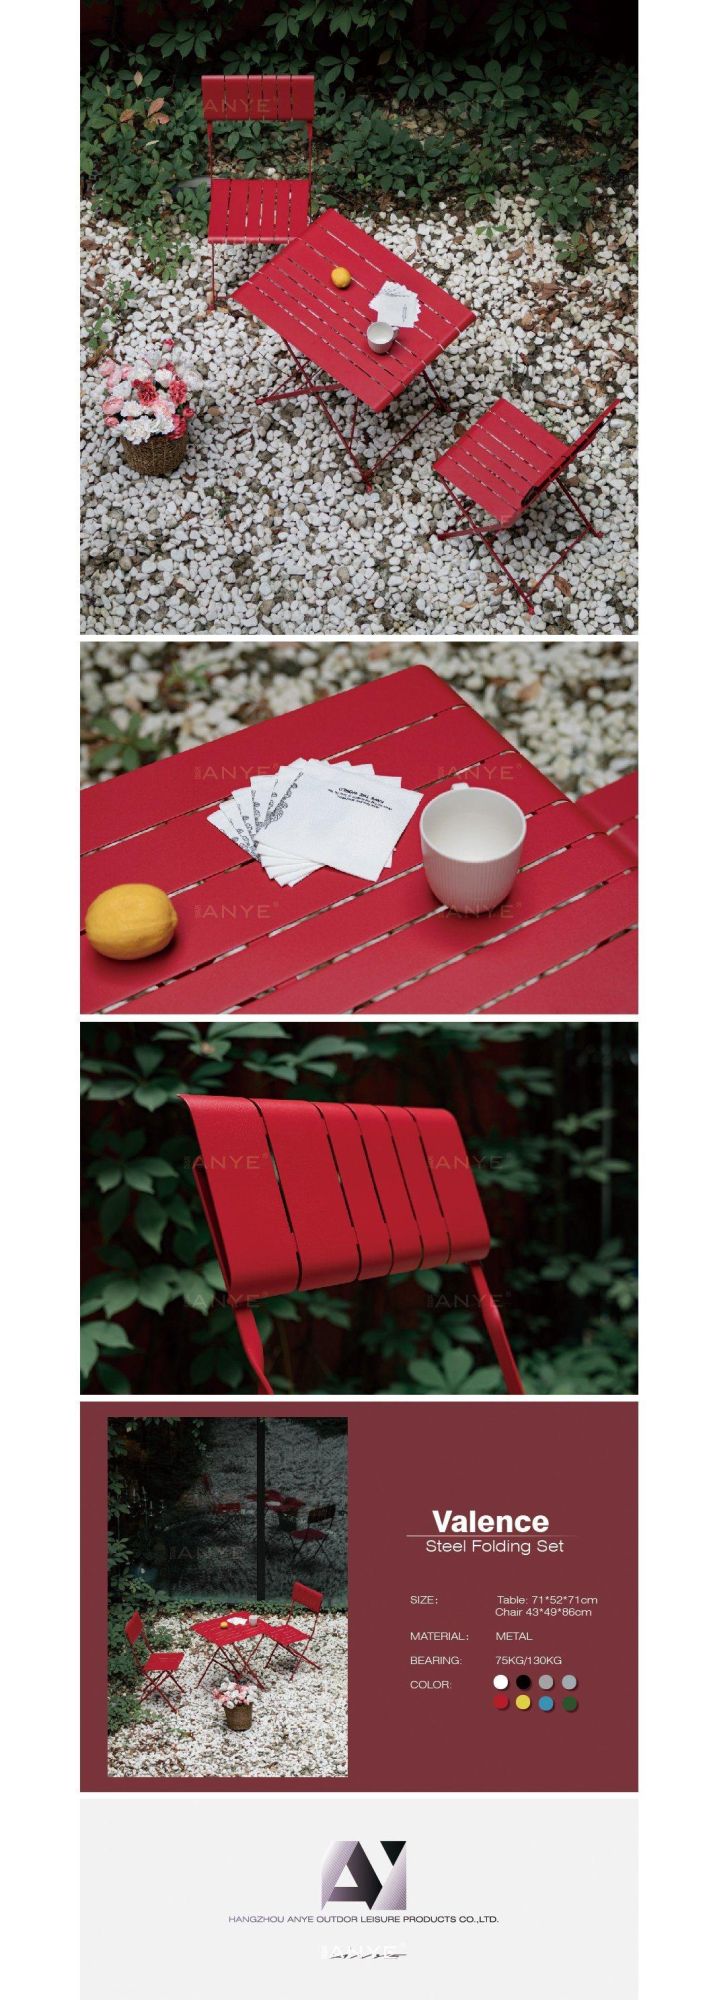 Durable Steel Slats Design Modern Folding Table and Chair Set Outdoor Garden Furniture